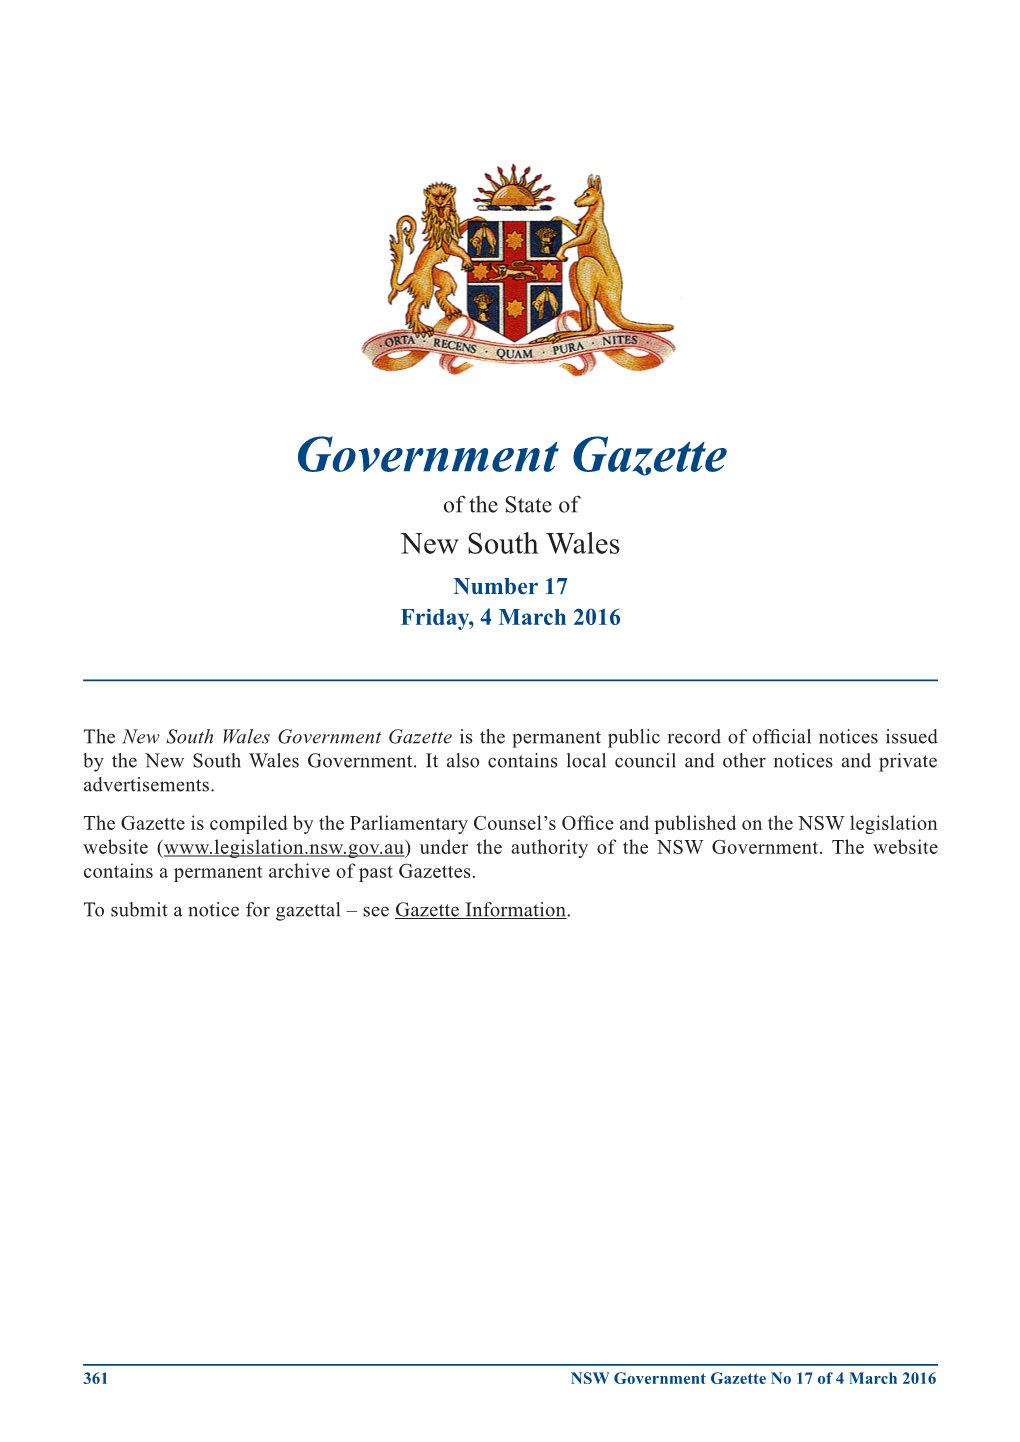 Government Gazette No 17 of 4 March 2016 Government Notices GOVERNMENT NOTICES Planning and Environment Notices